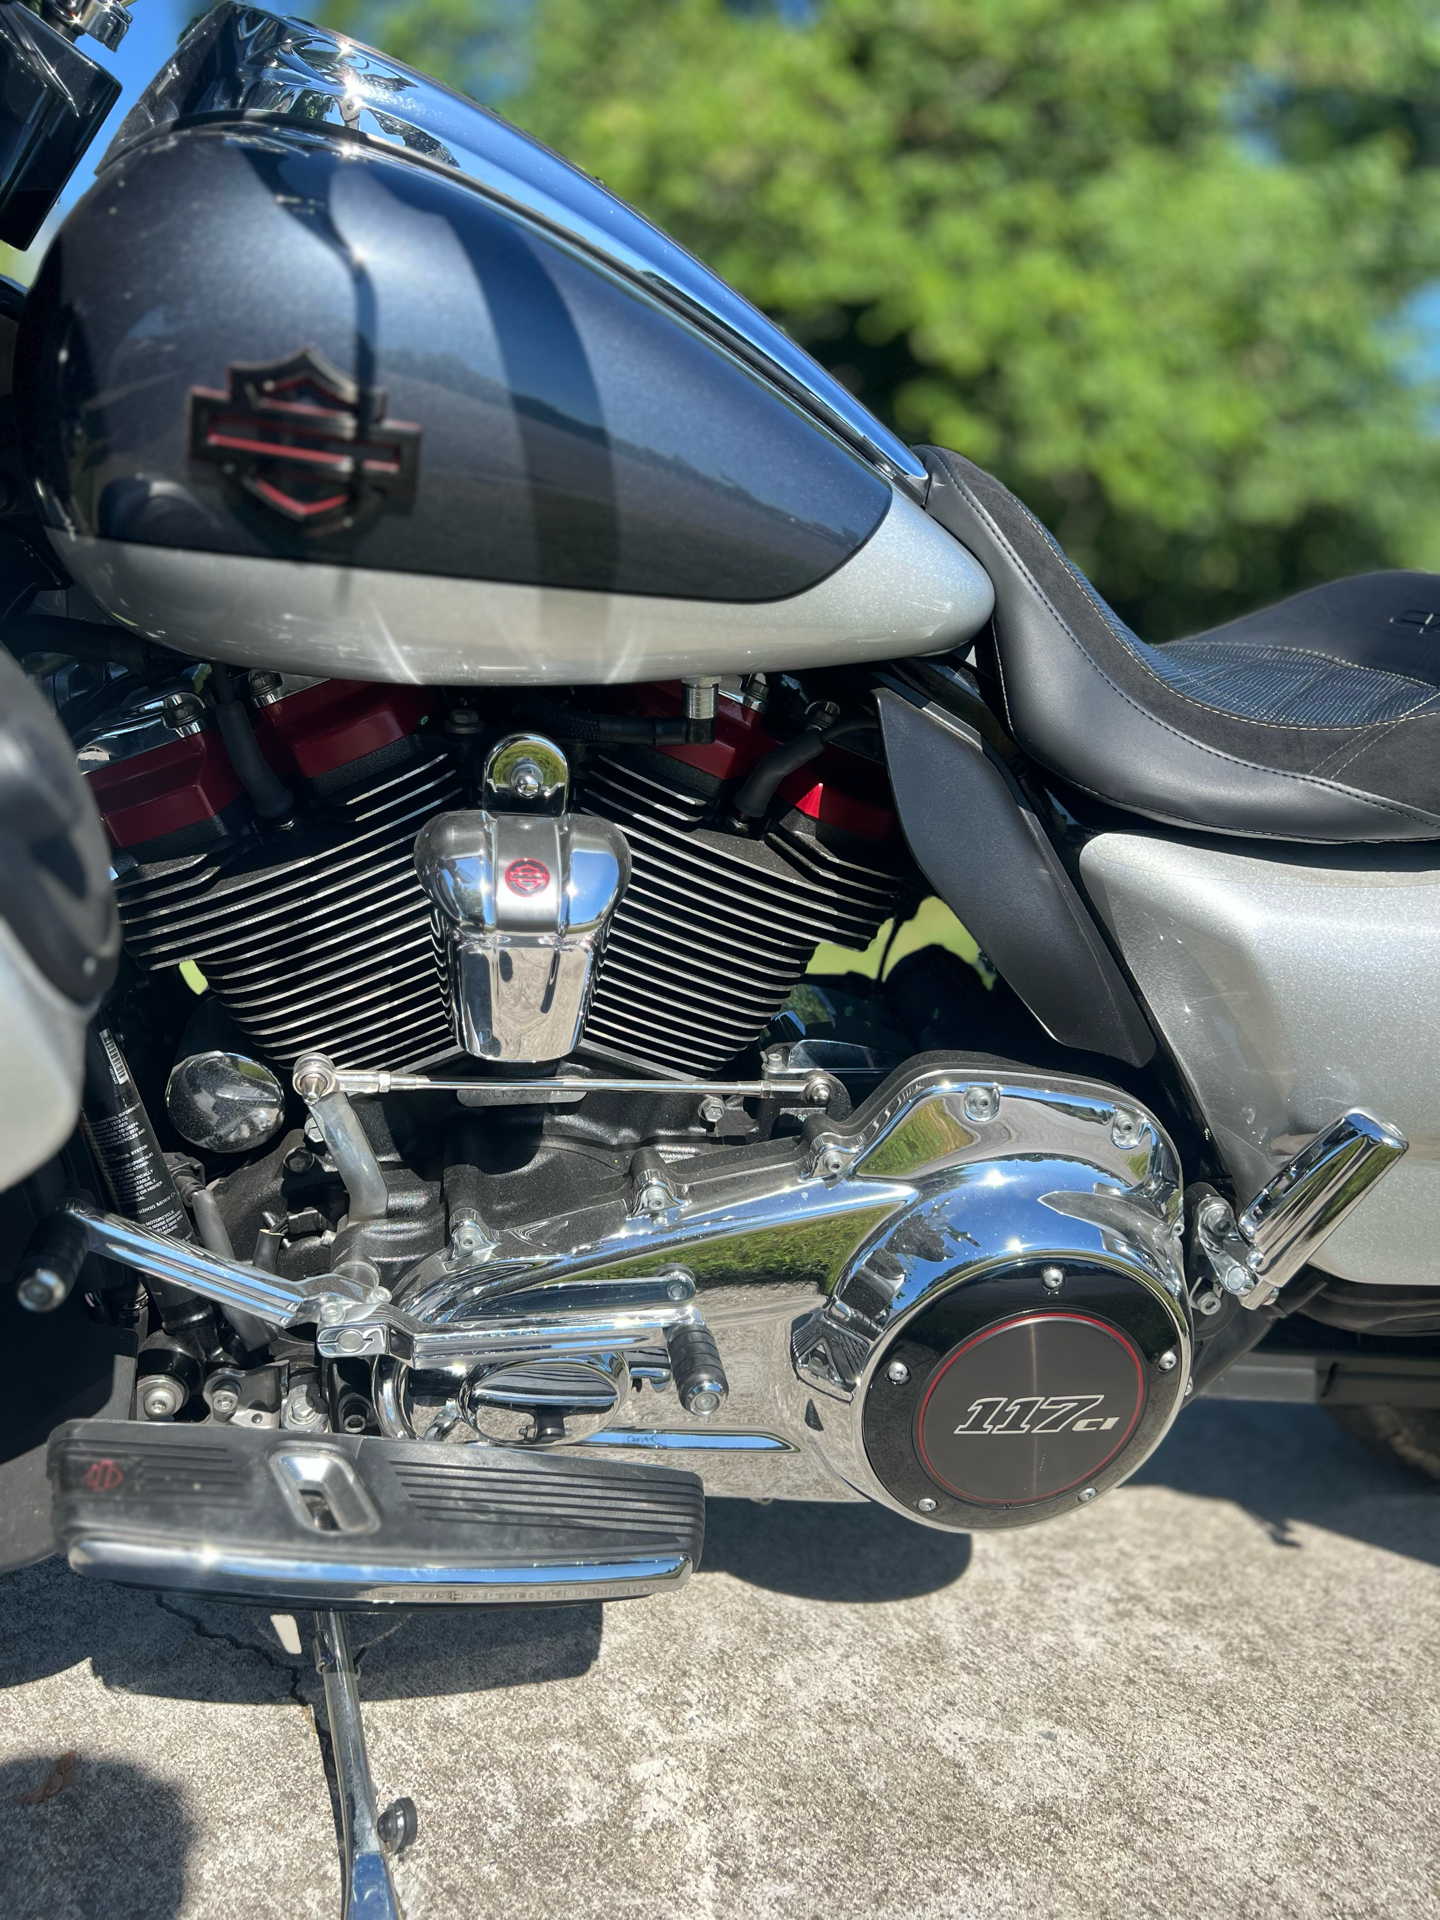 2019 Harley-Davidson CVO™ Street Glide® in Franklin, Tennessee - Photo 22